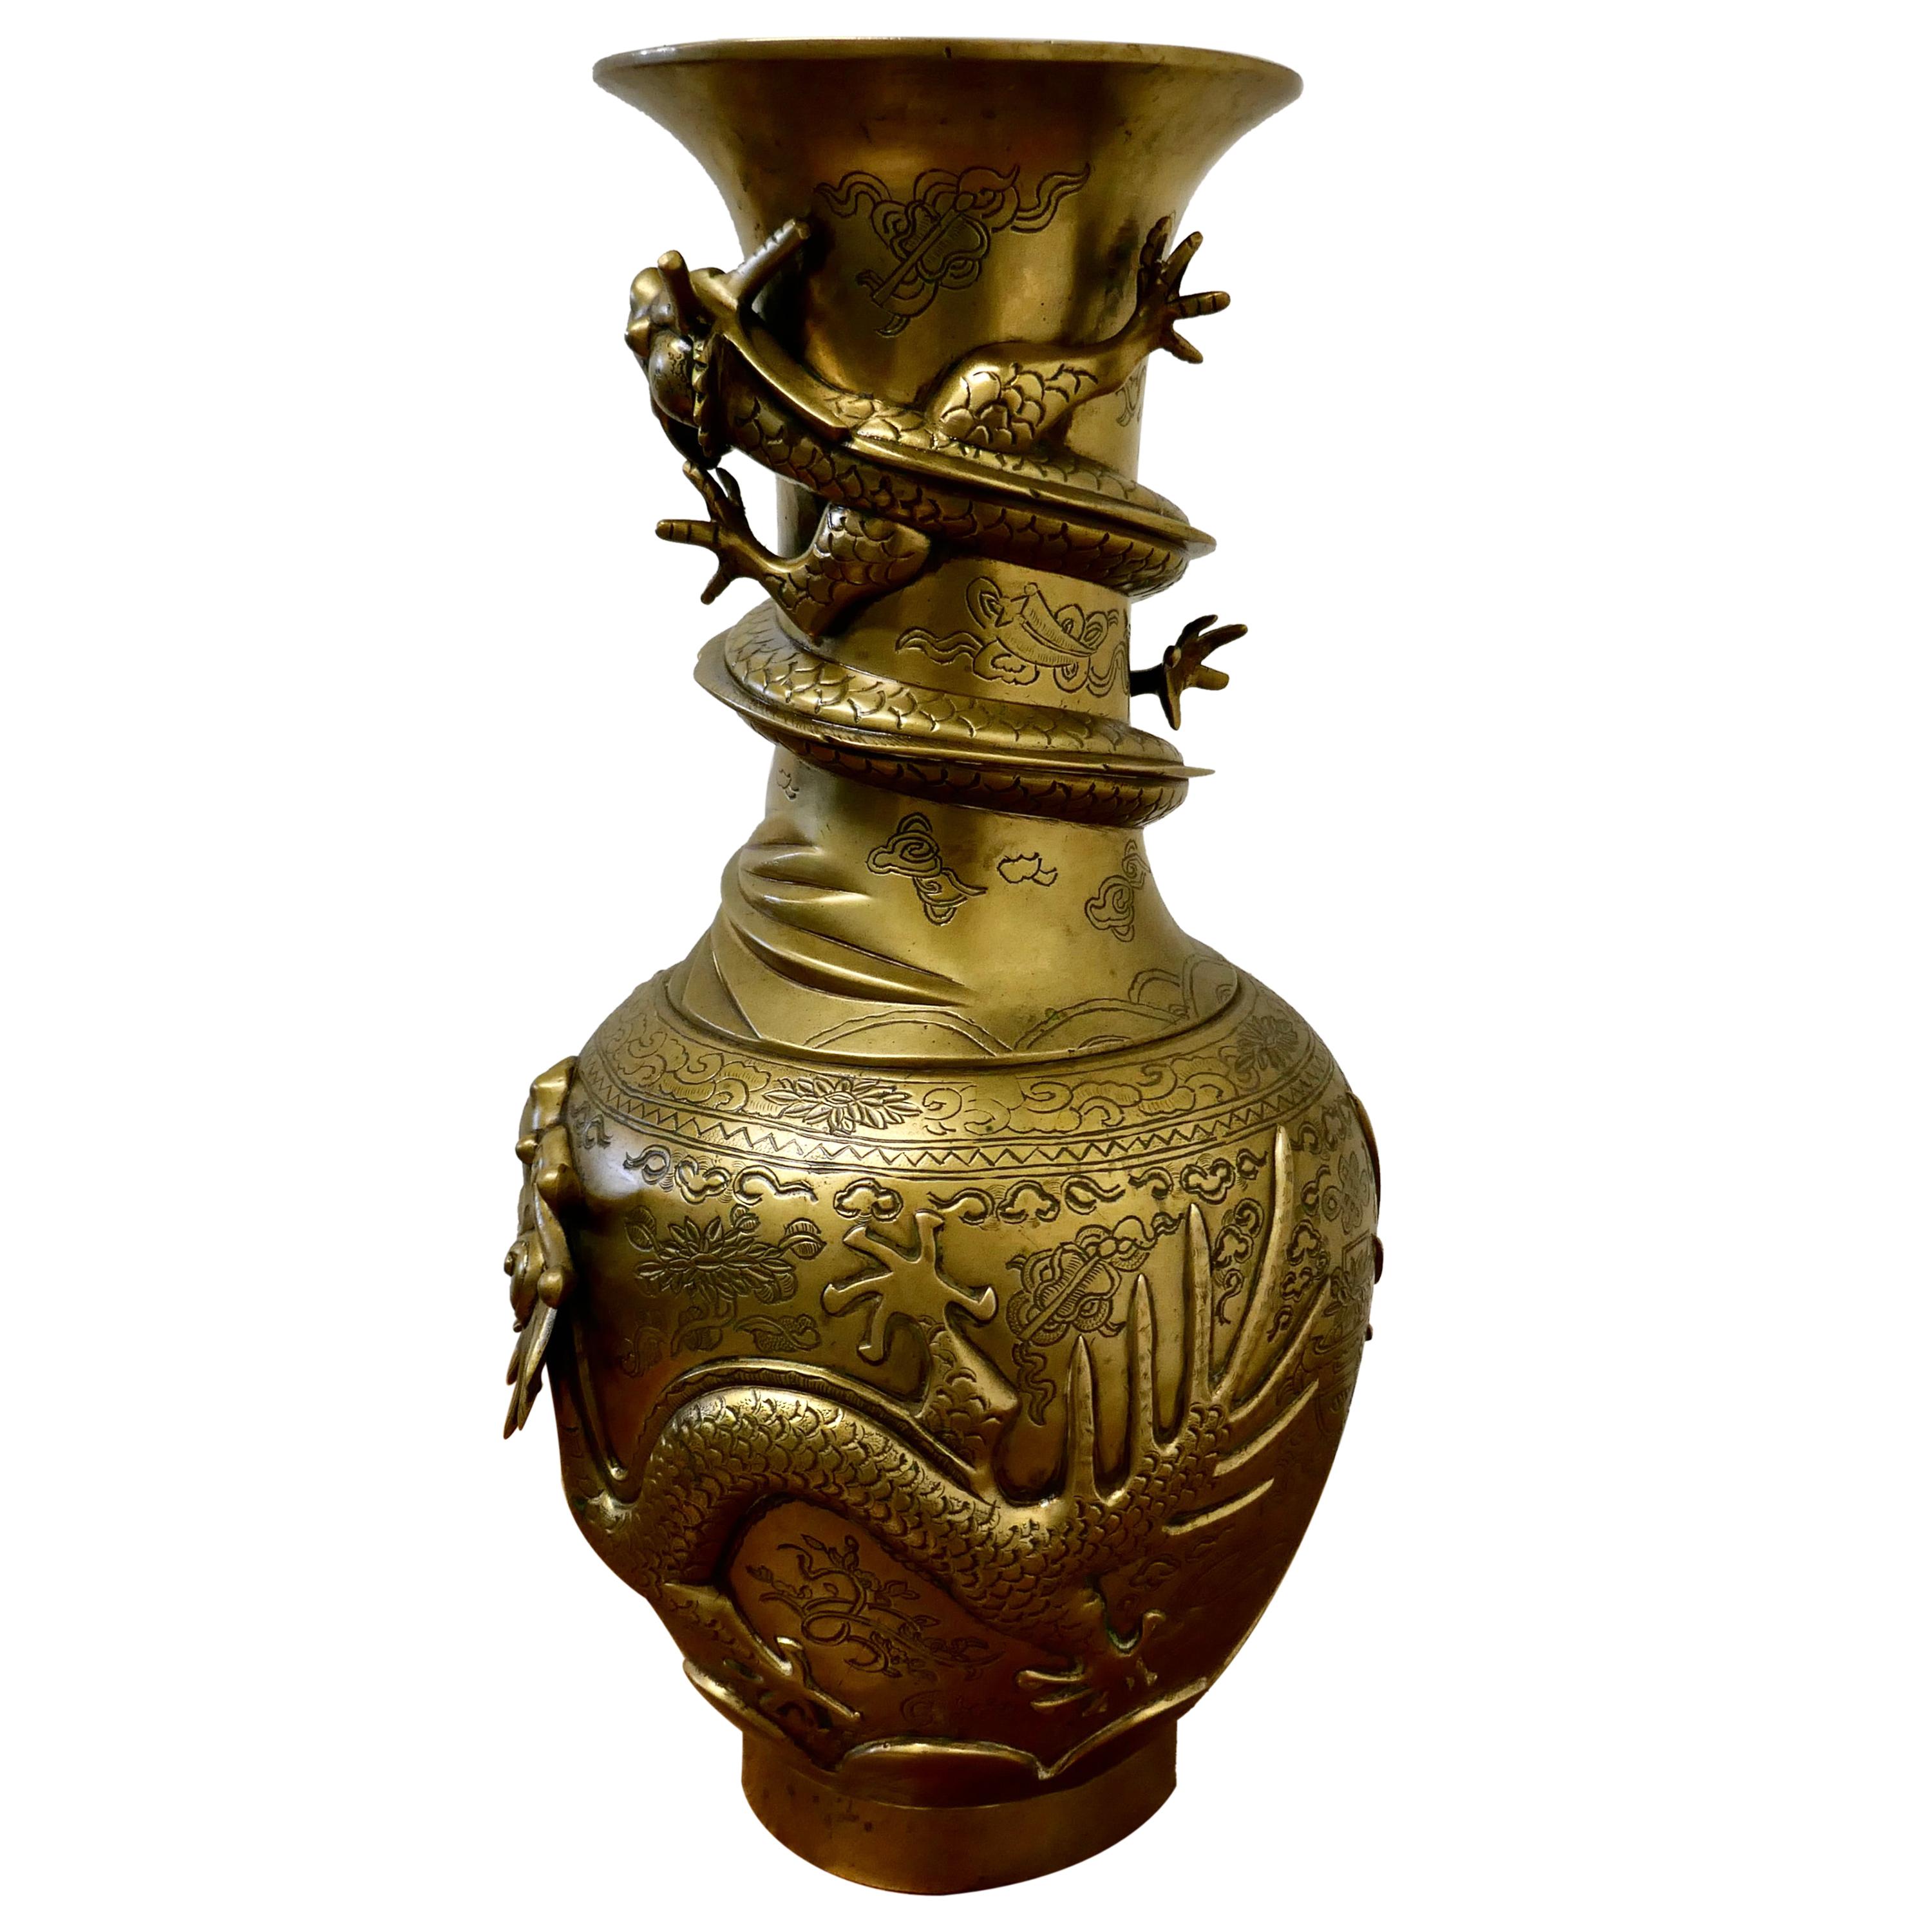 Large Oriental 19th Century Decorated Brass Vase